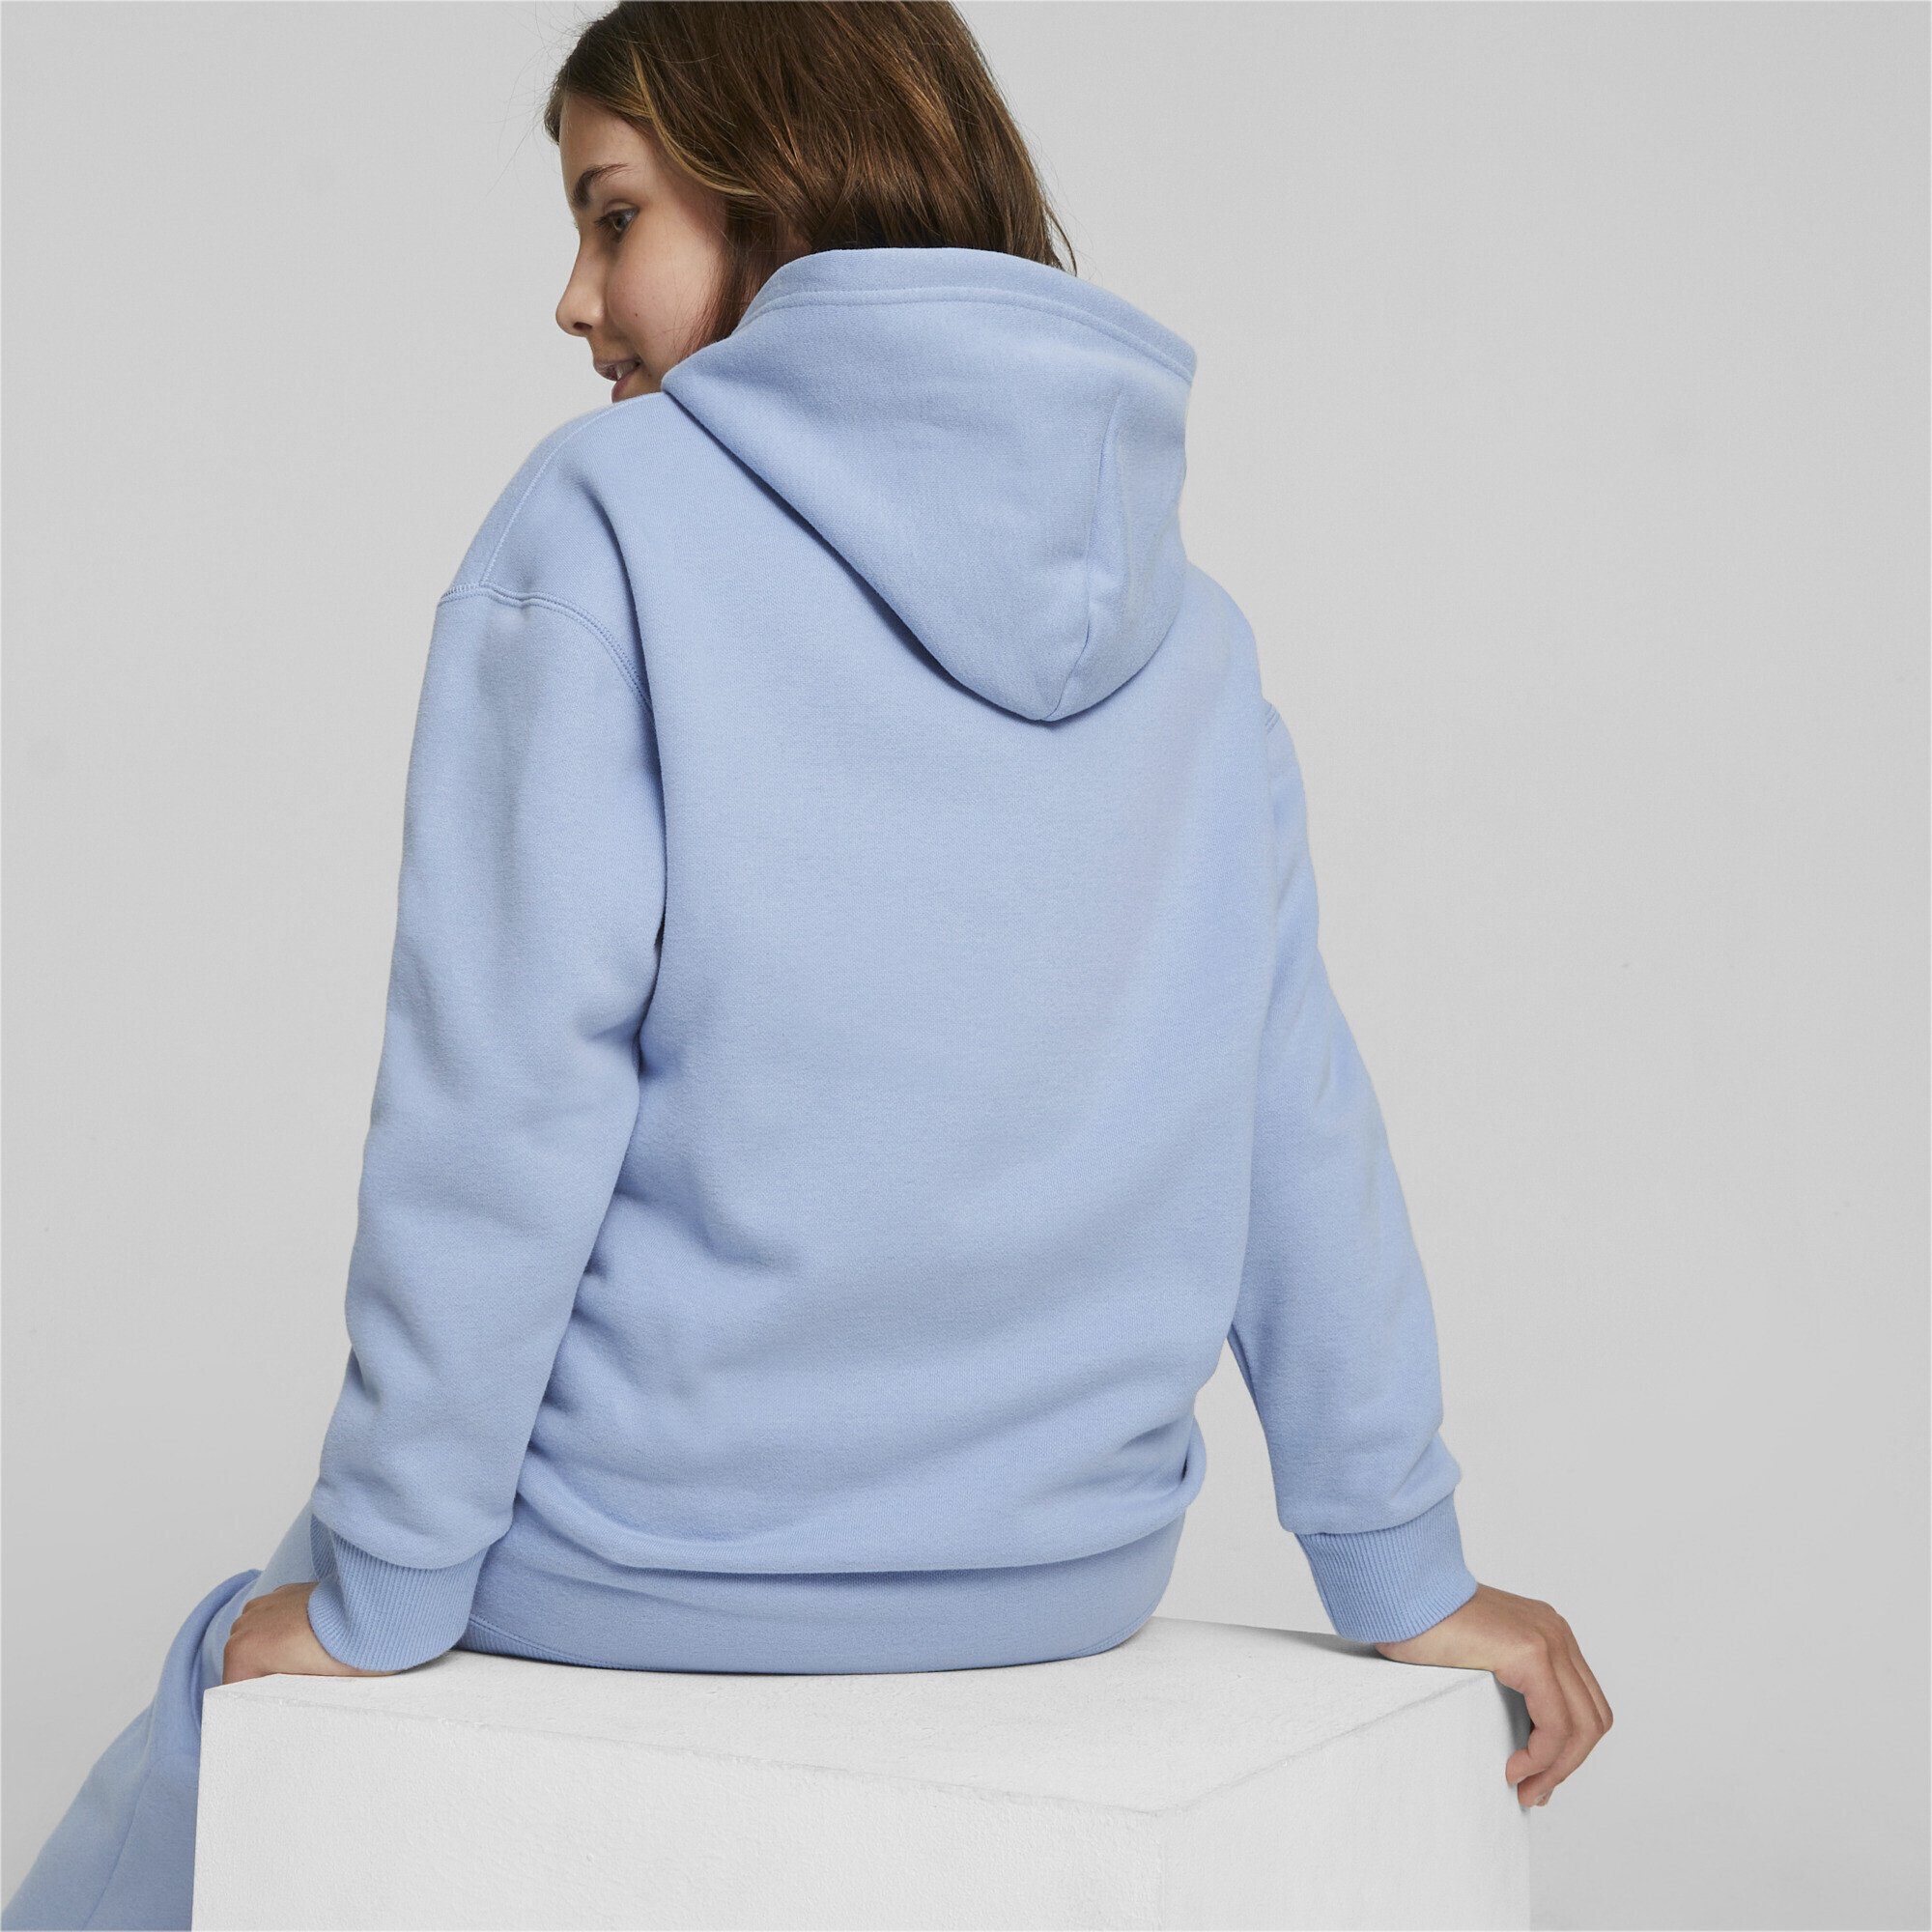 Blue Mädchen Hoodie Sweatshirt Blissful Weather PUMA Classics Sweater